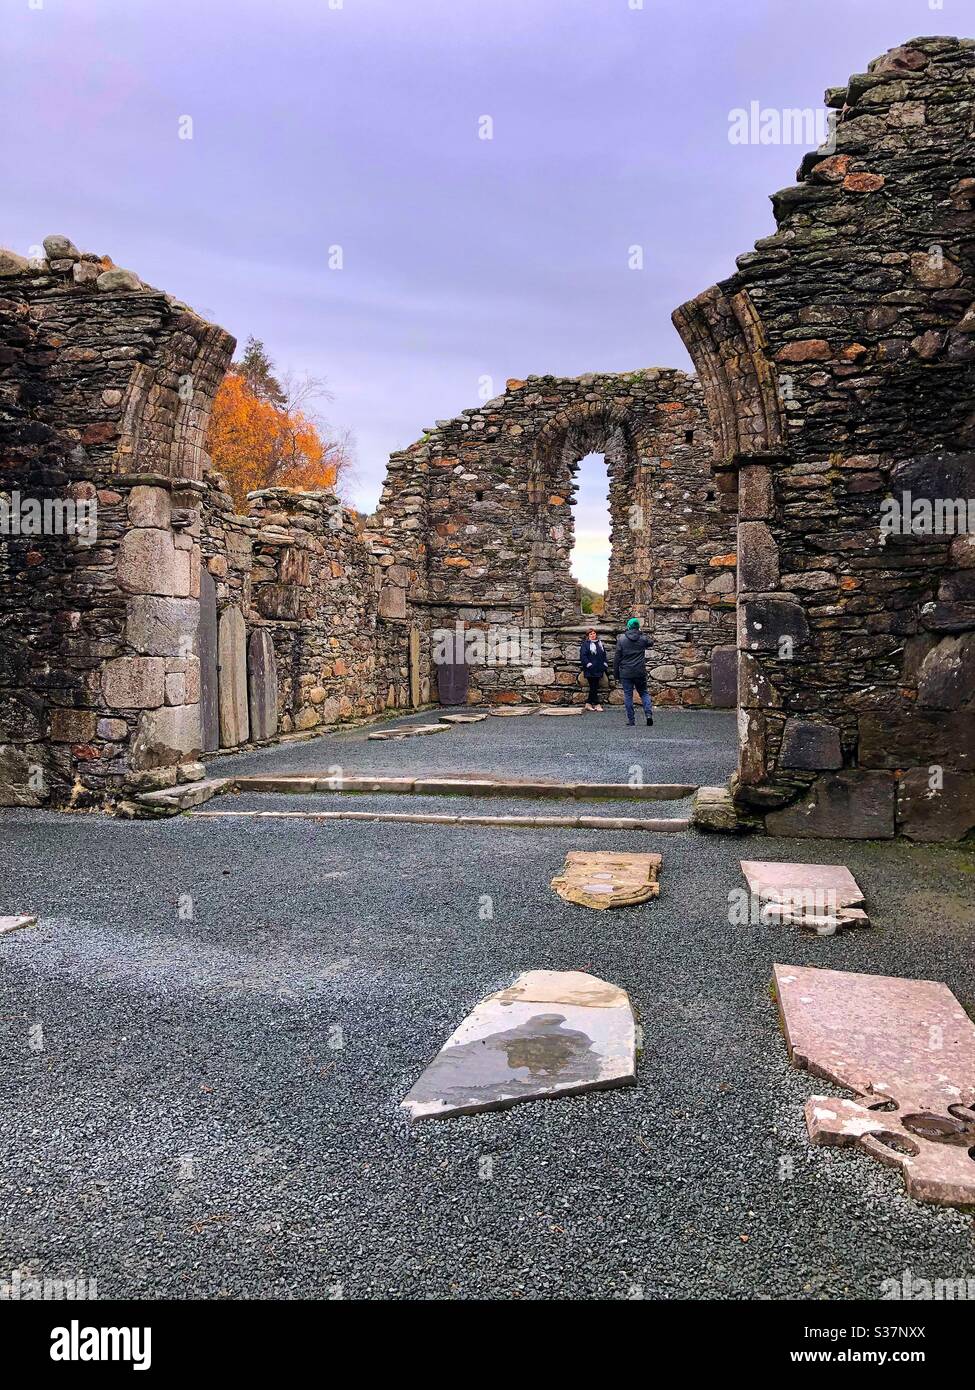 Monastic site in Glendalough, Ireland. Taken November 2nd, 2019. Stock Photo